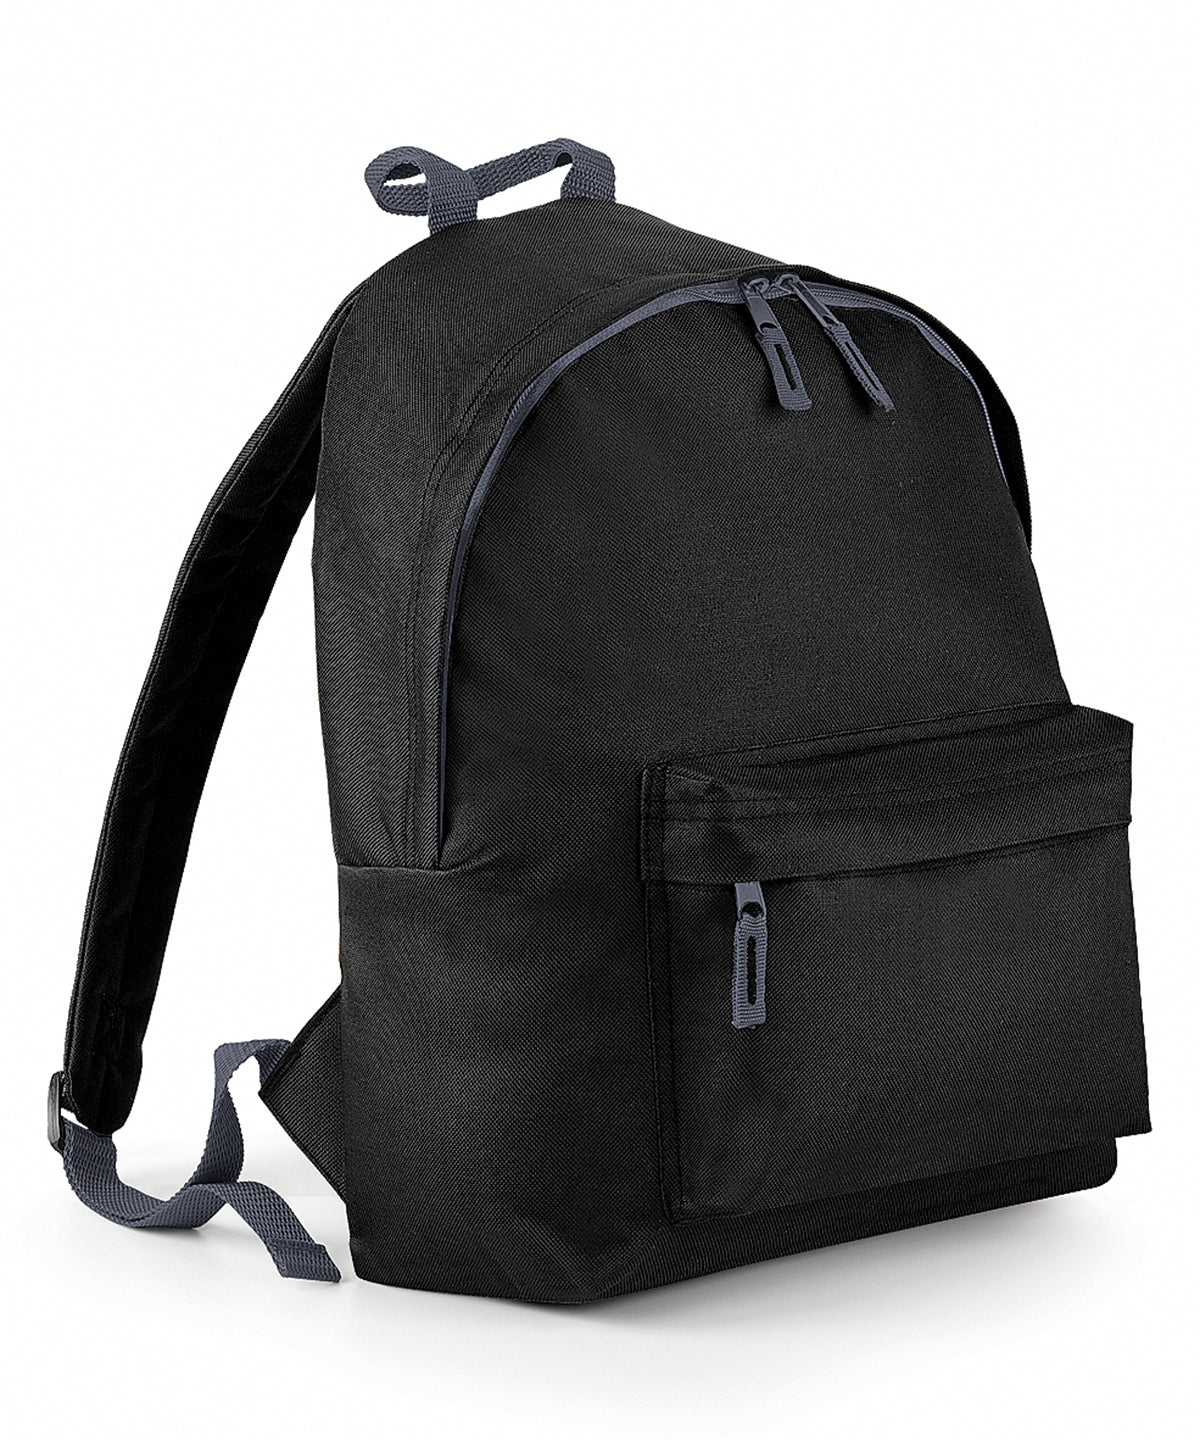 Personalised Bags - Black Bagbase Original fashion backpack